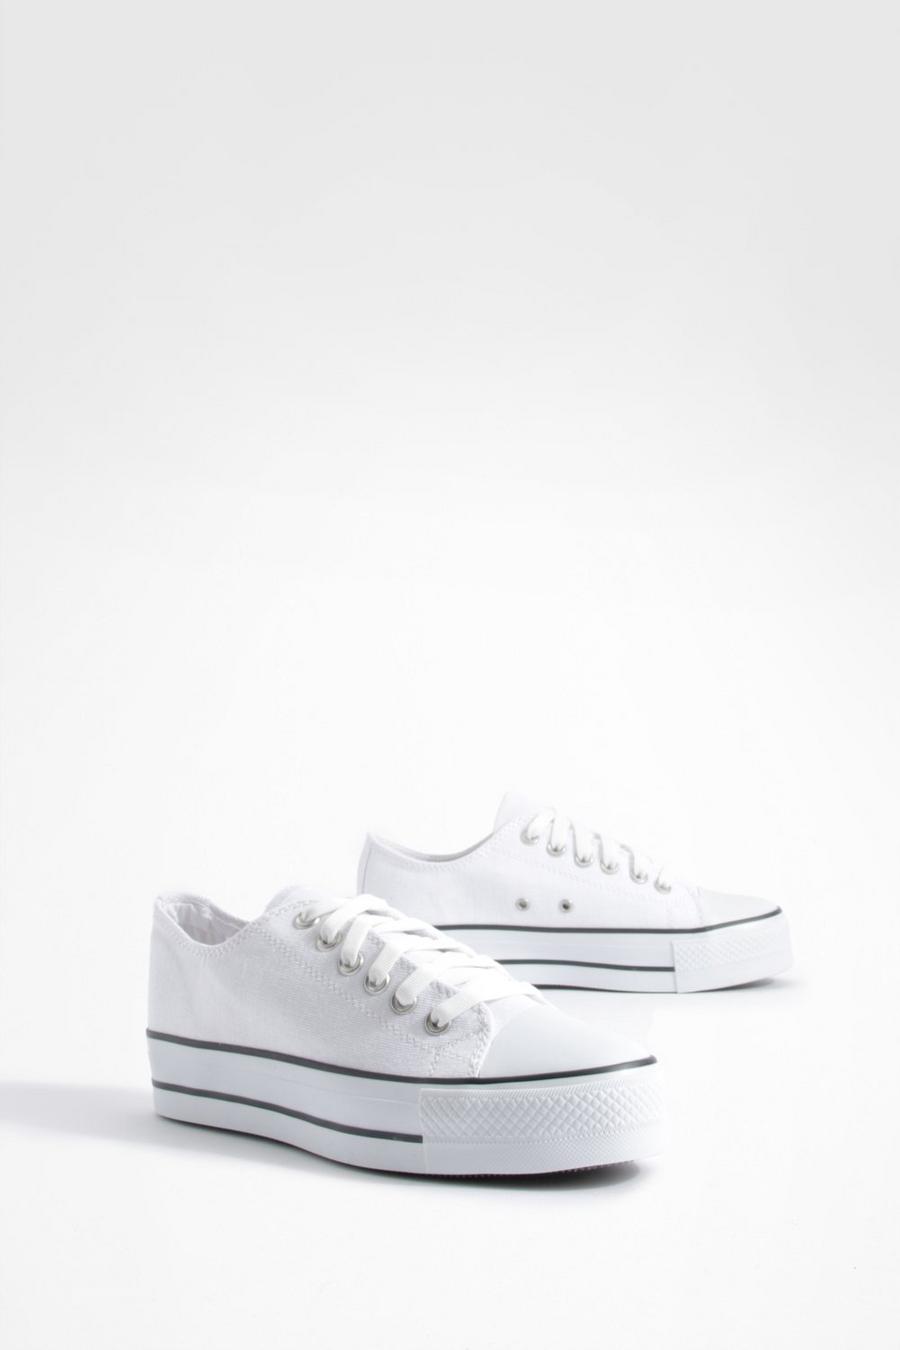 Klobige Low-Top Canvas Sneaker, White blanc